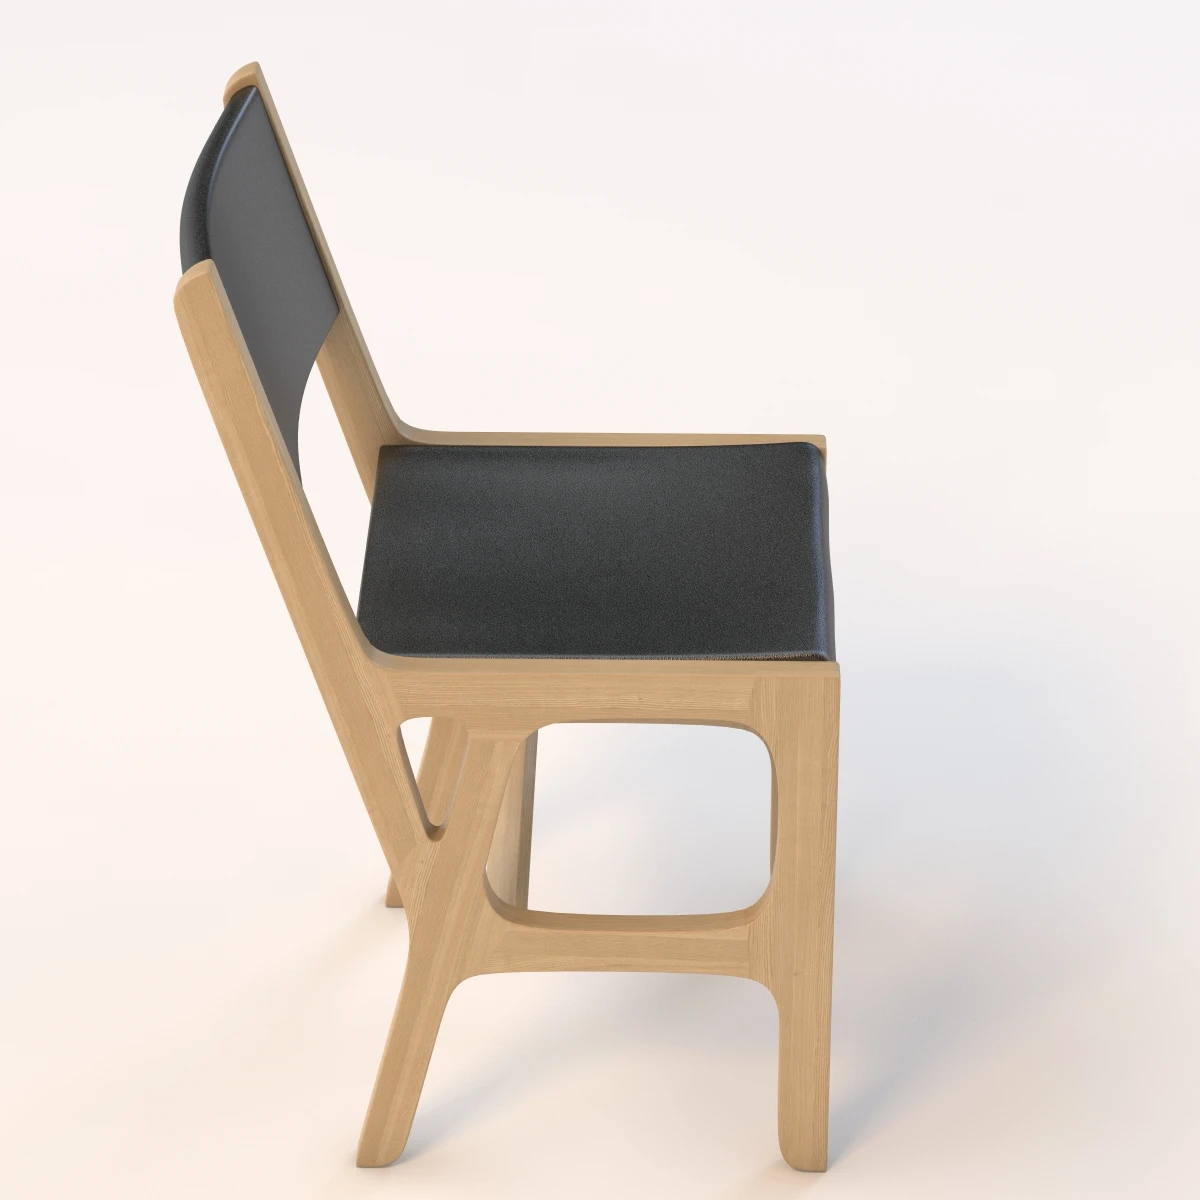 Kahve Chair 3D Model_03